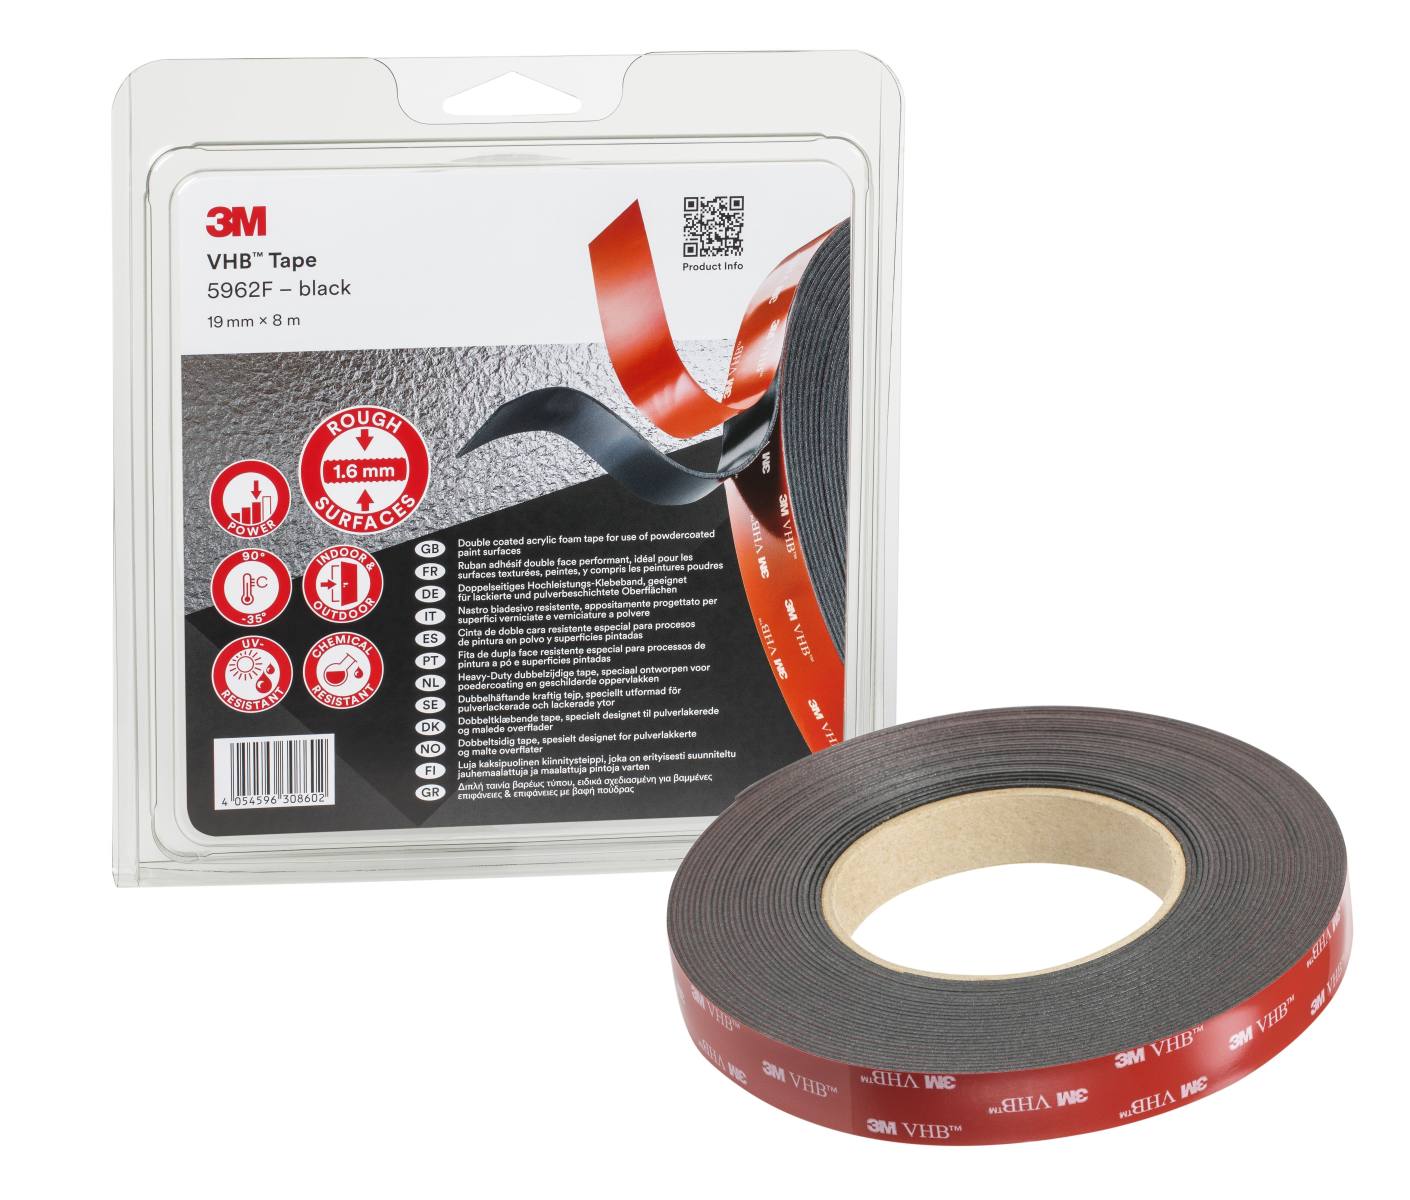 3M VHB Adhesive tape 5962F, black, 19 mm x 8 m, 1.6 mm, blister pack